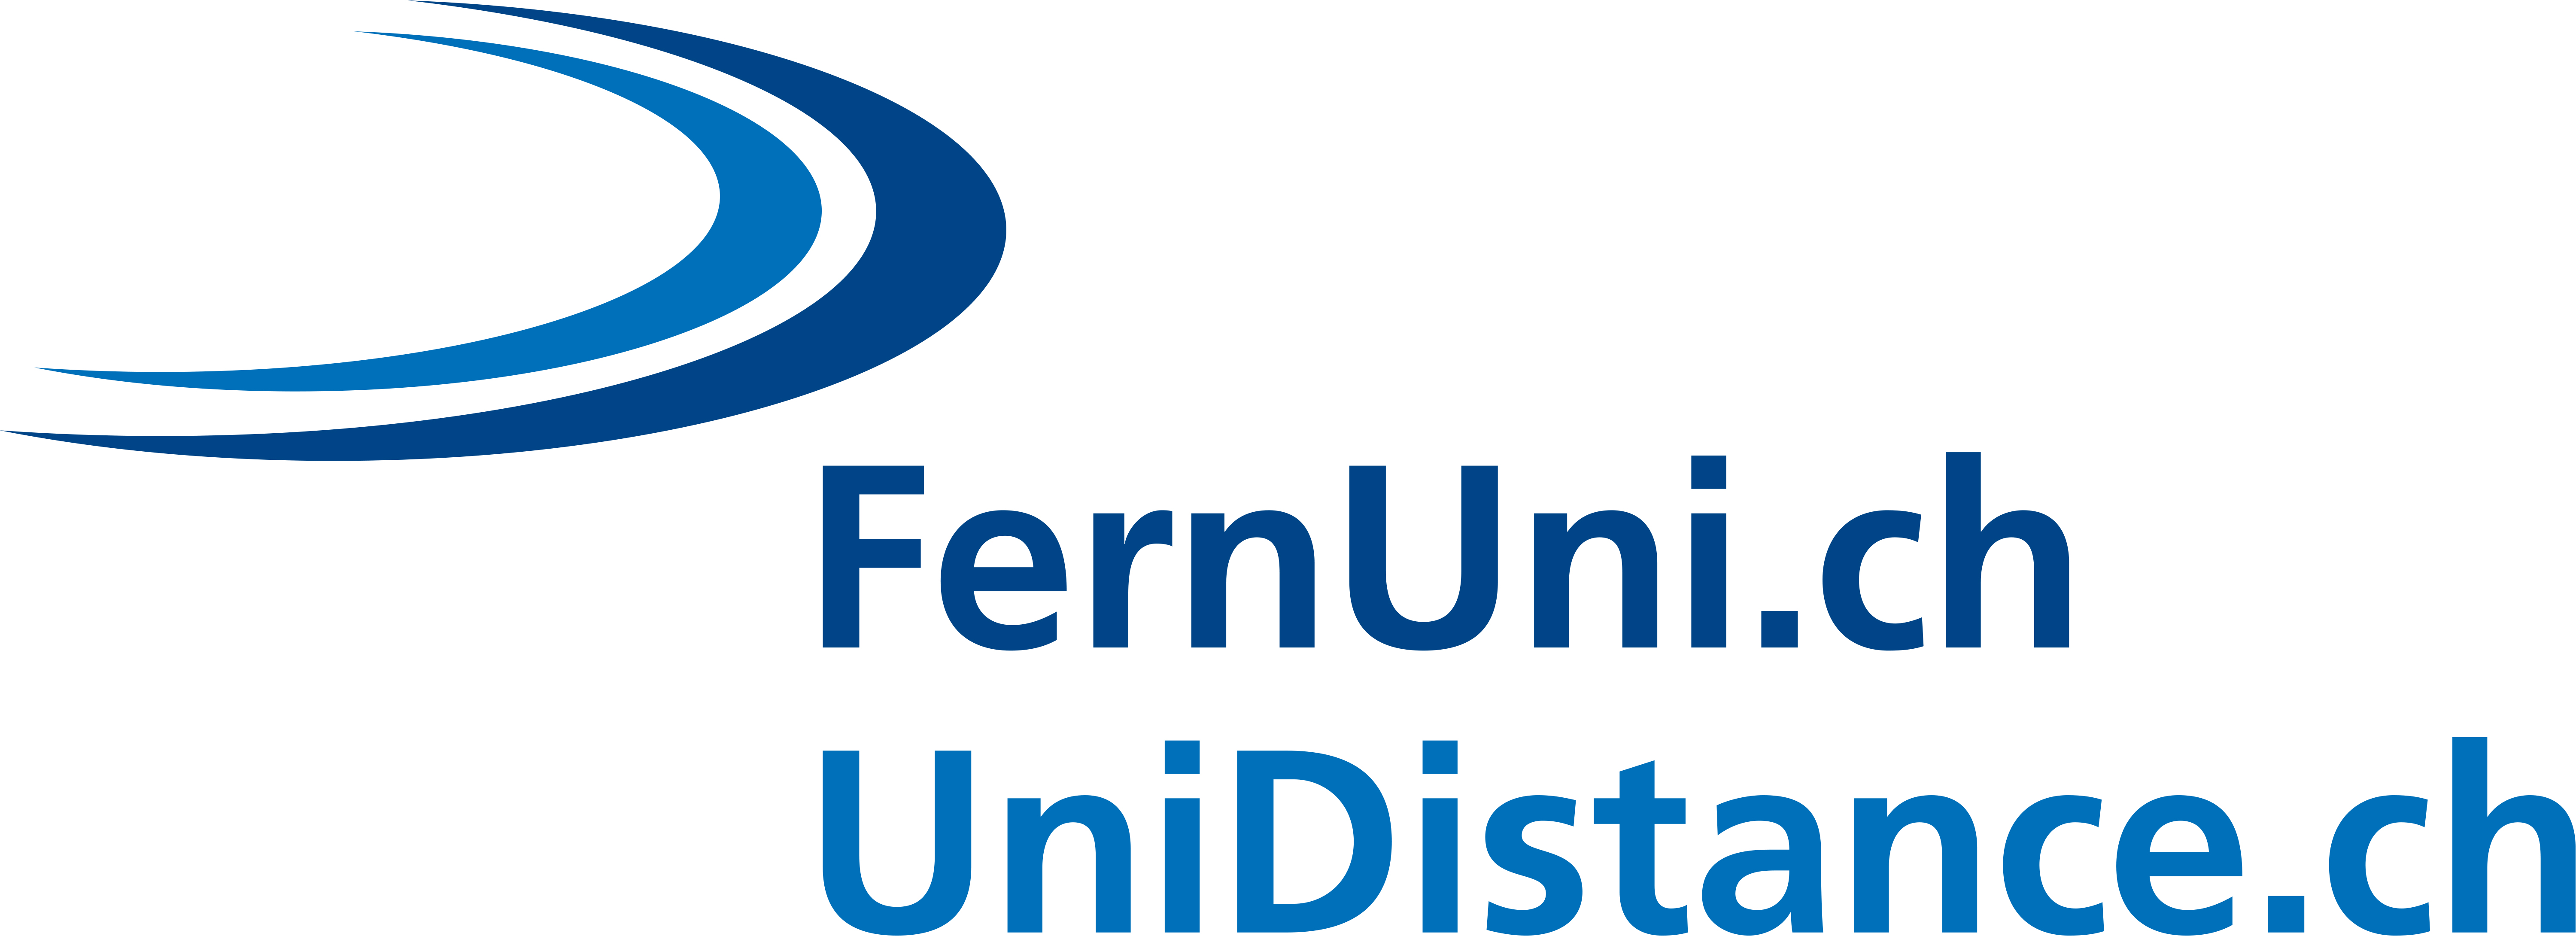 Unidistance's logo